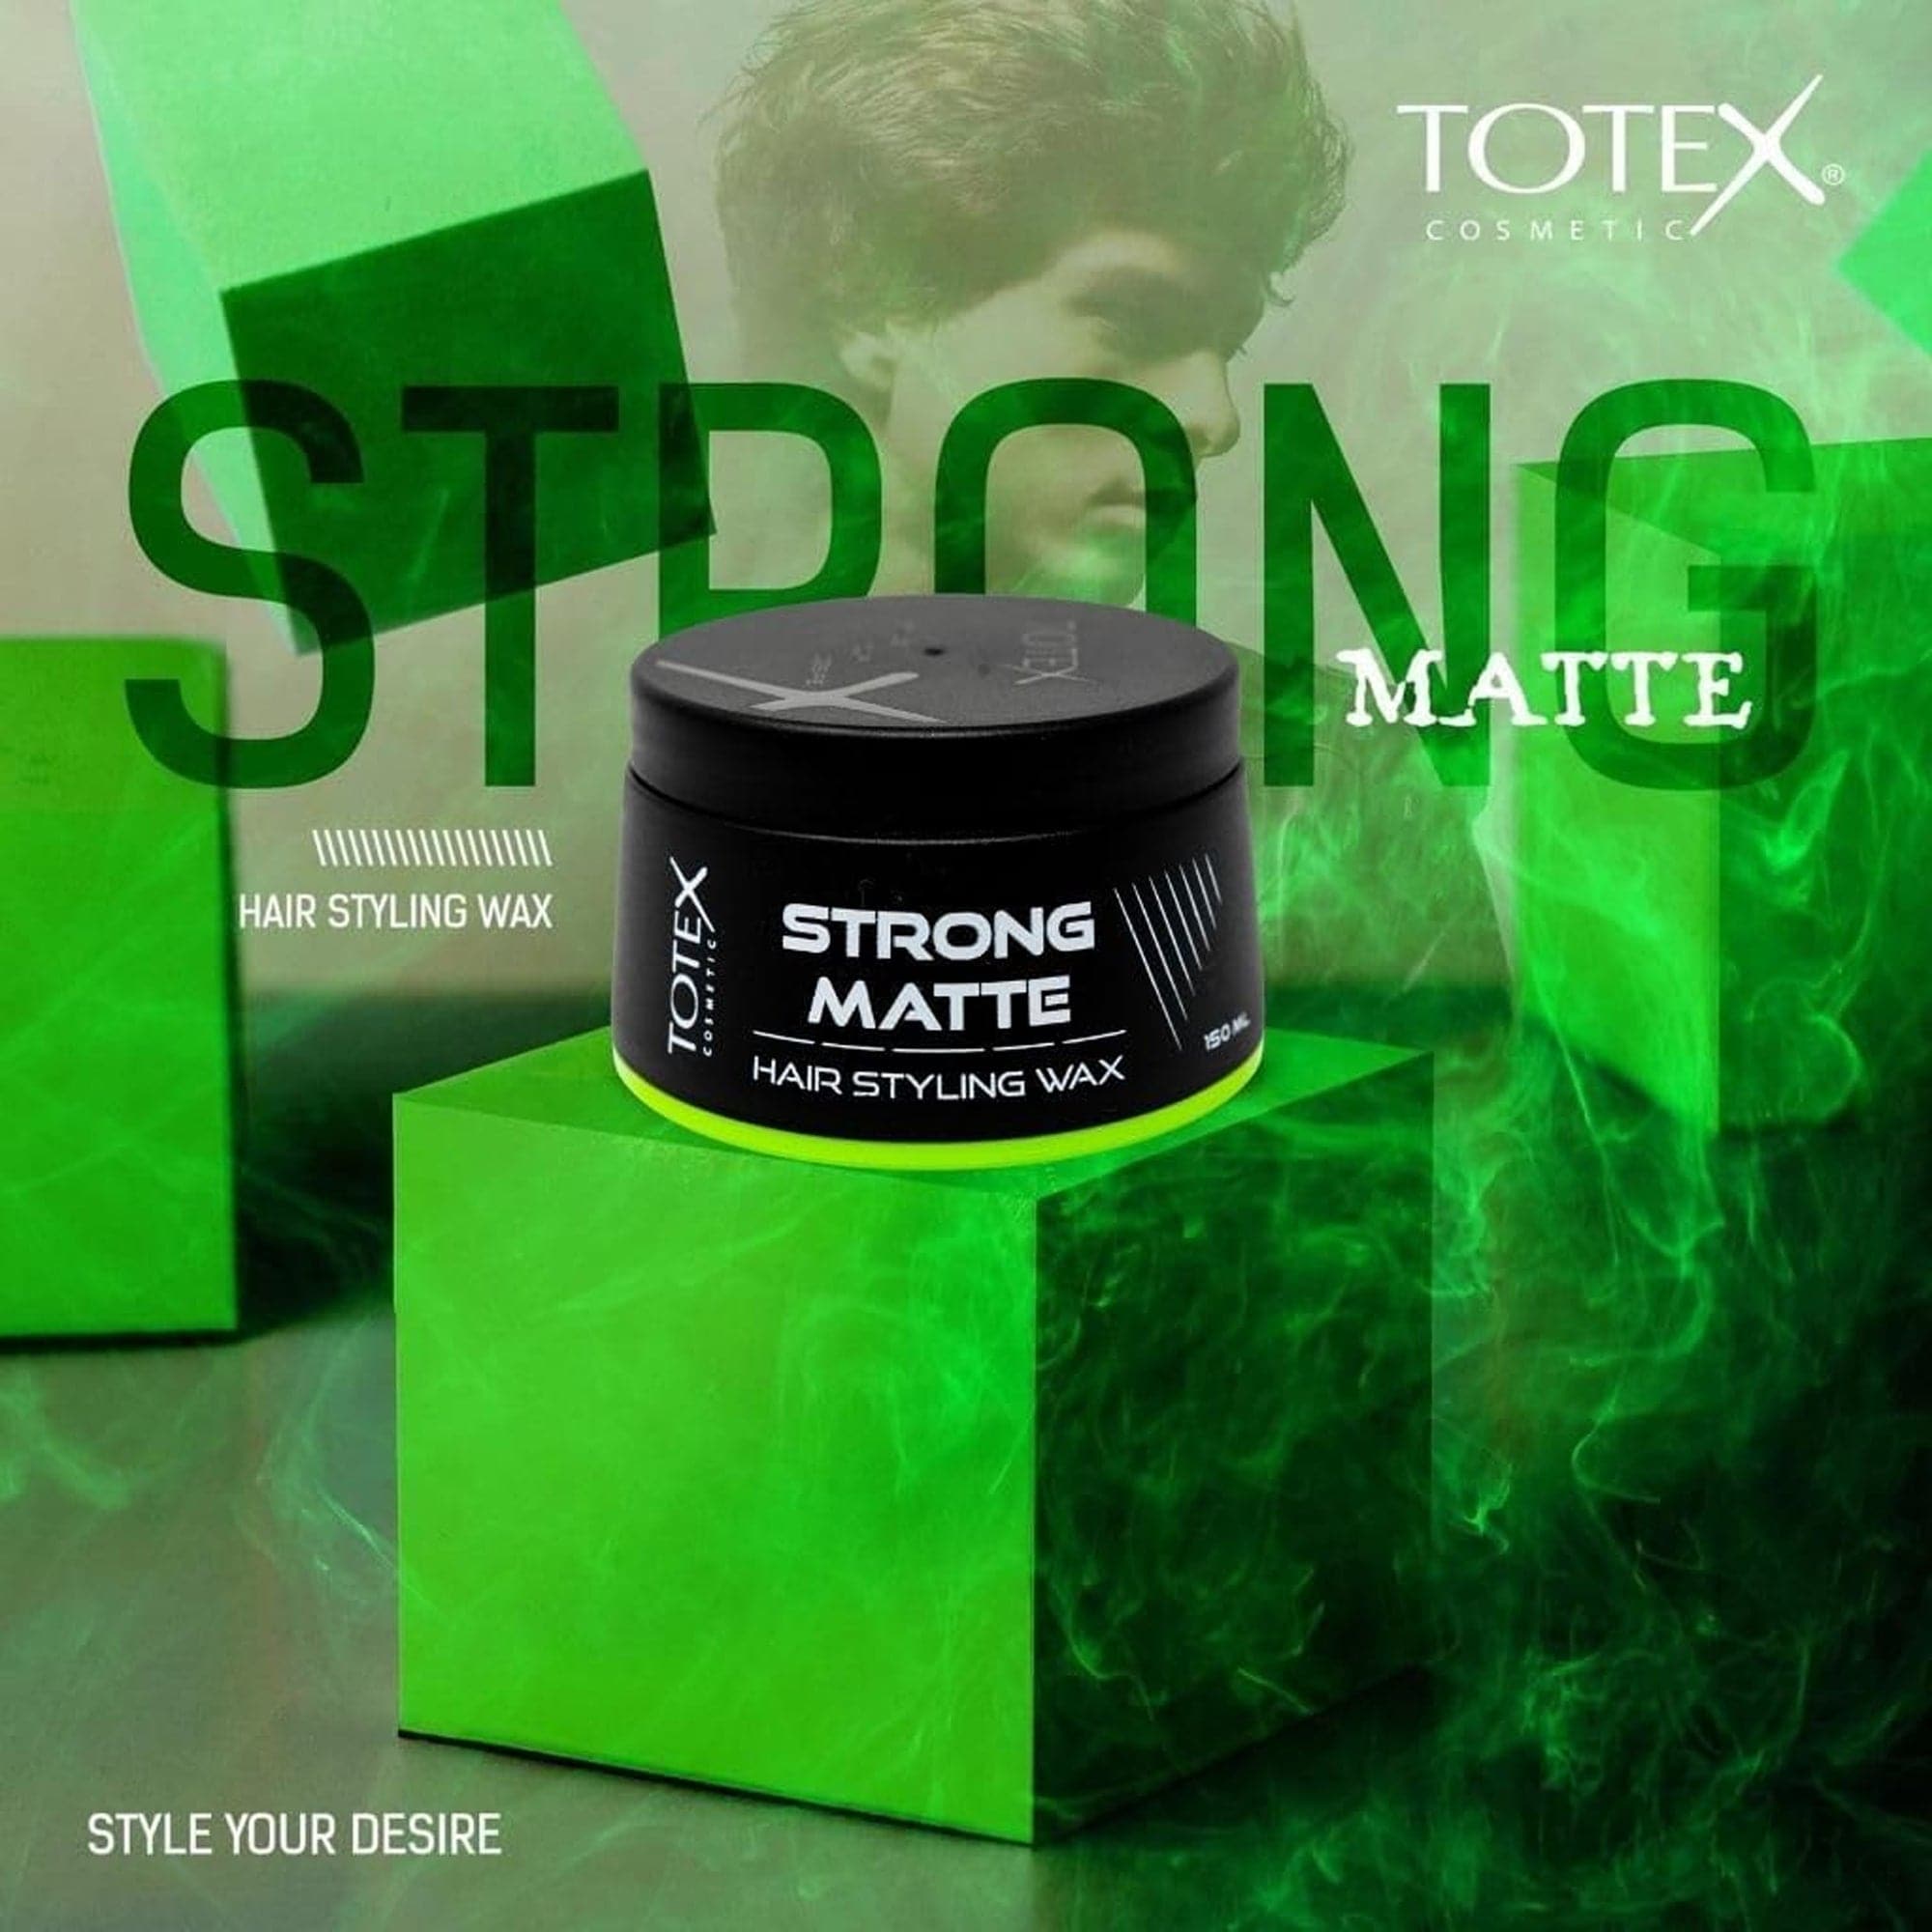 Totex - Hair Styling Wax Strong Matte 150ml